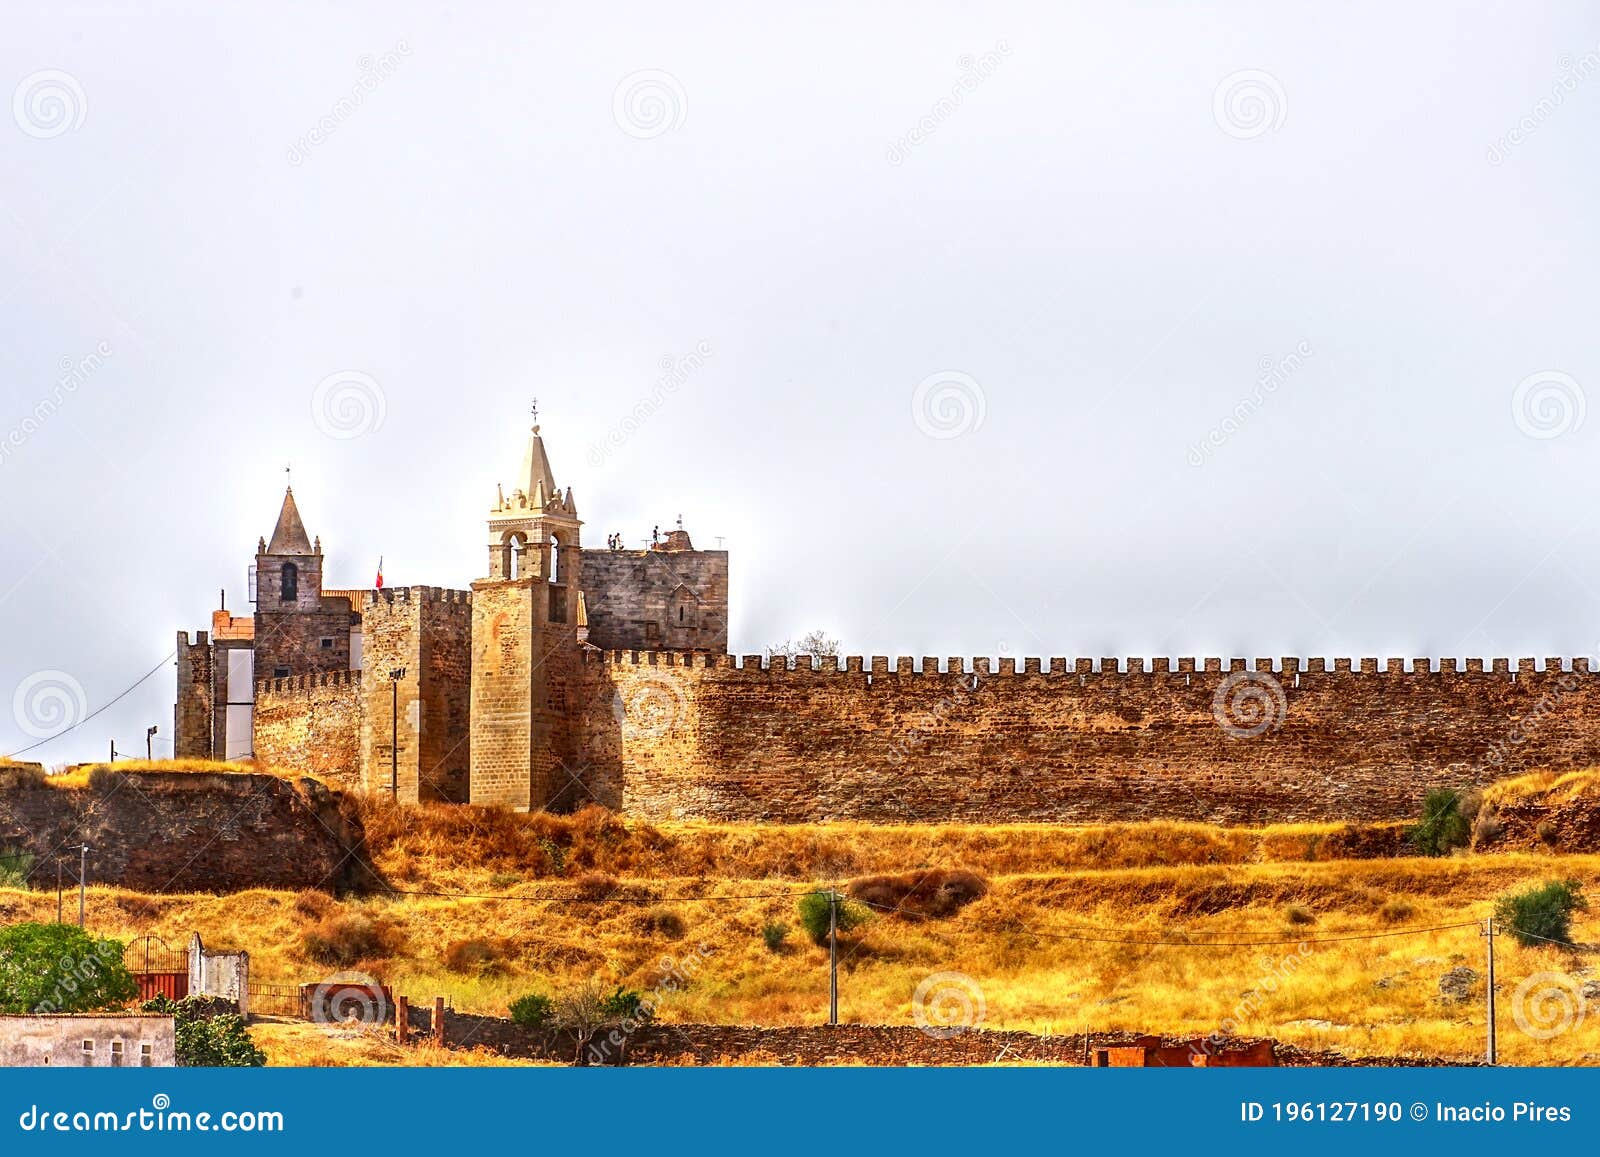 landscape of mourao castle, alentejo, portugal